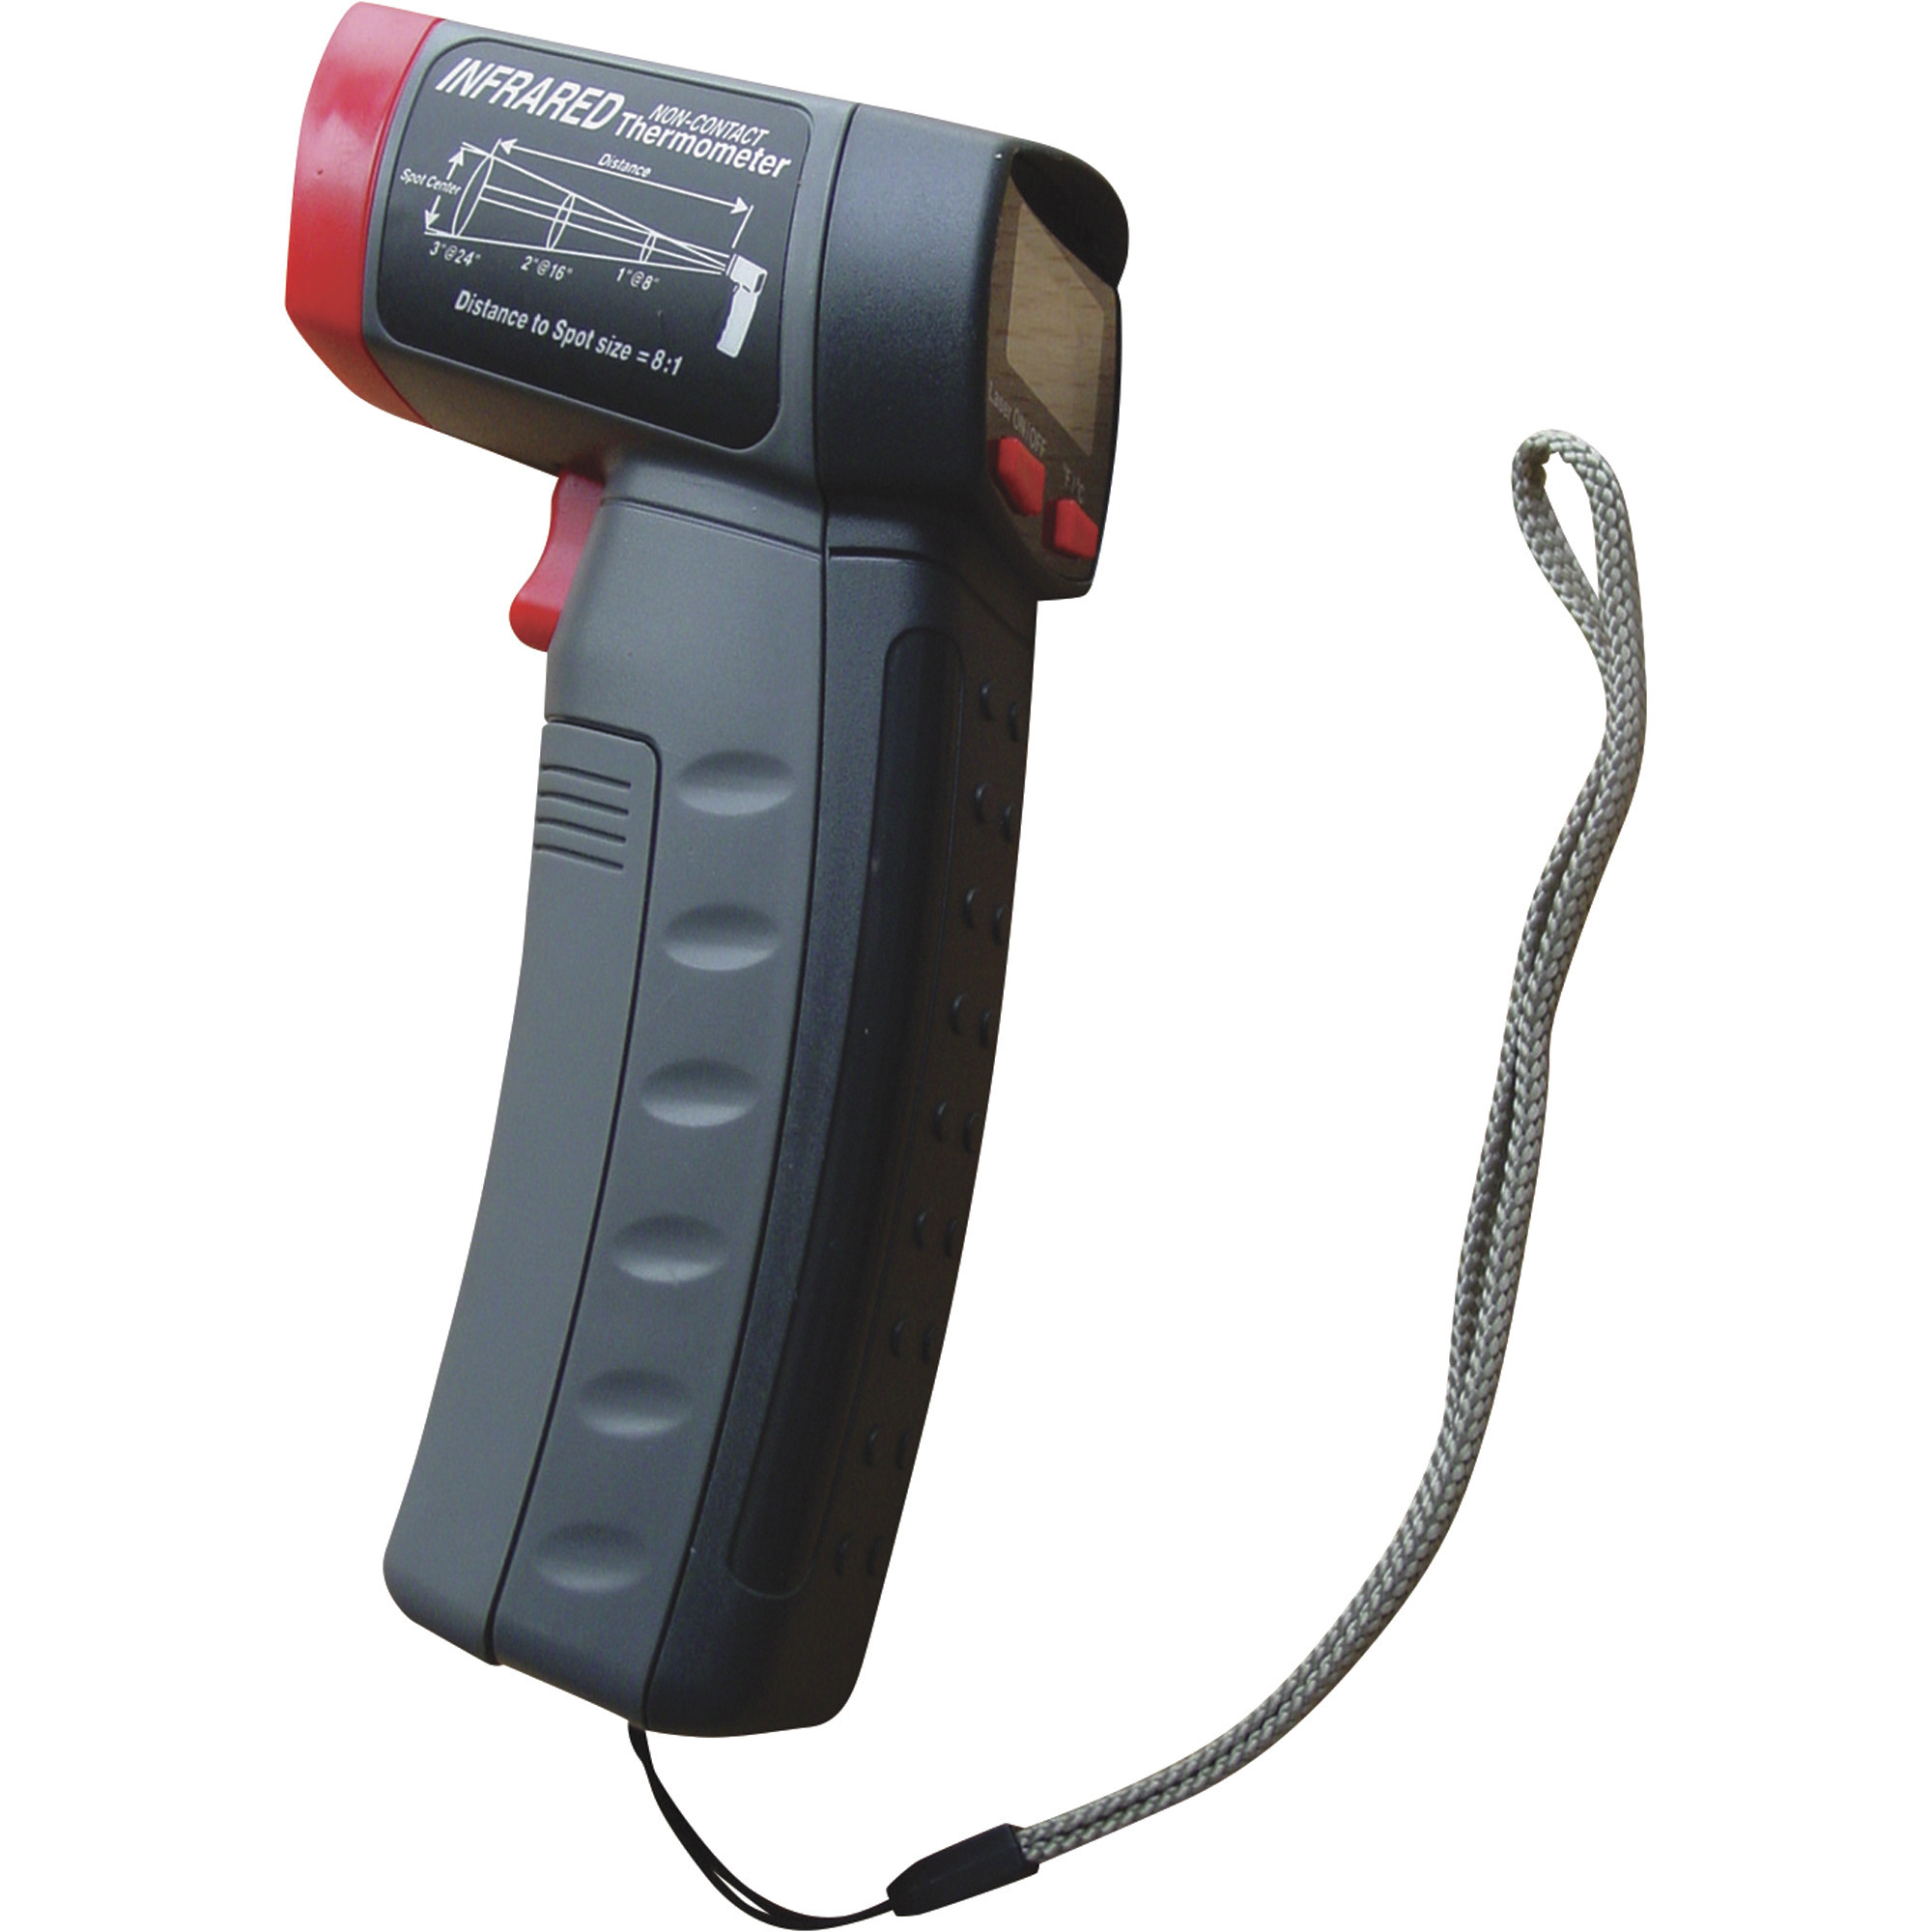 Milwaukee Laser Temperature Gun Infrared 10:1 Thermometer 2267-20